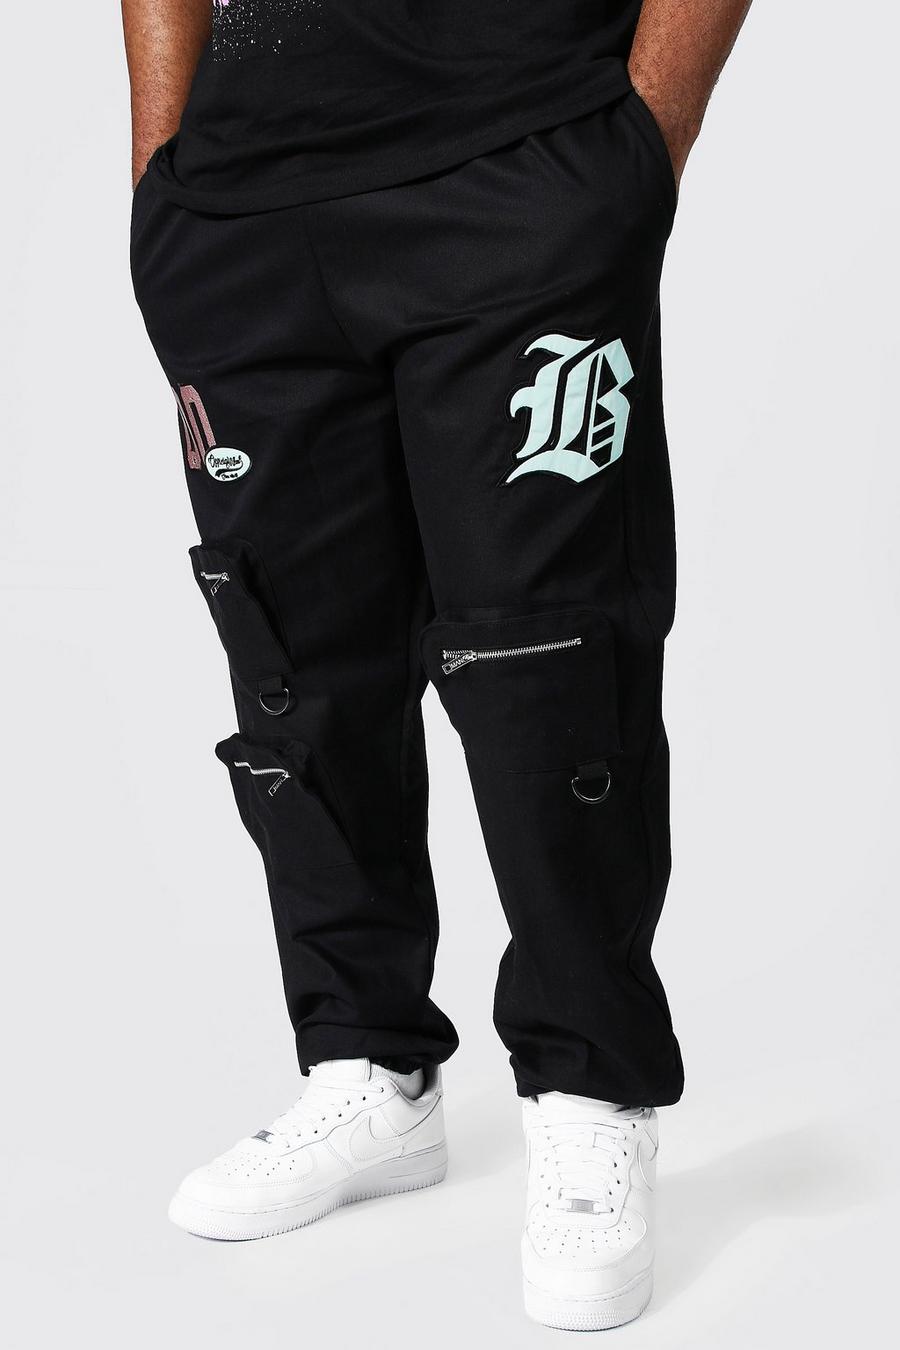 Pantaloni tuta Cargo Plus Size stile Varsity con tasca frontale, Black negro